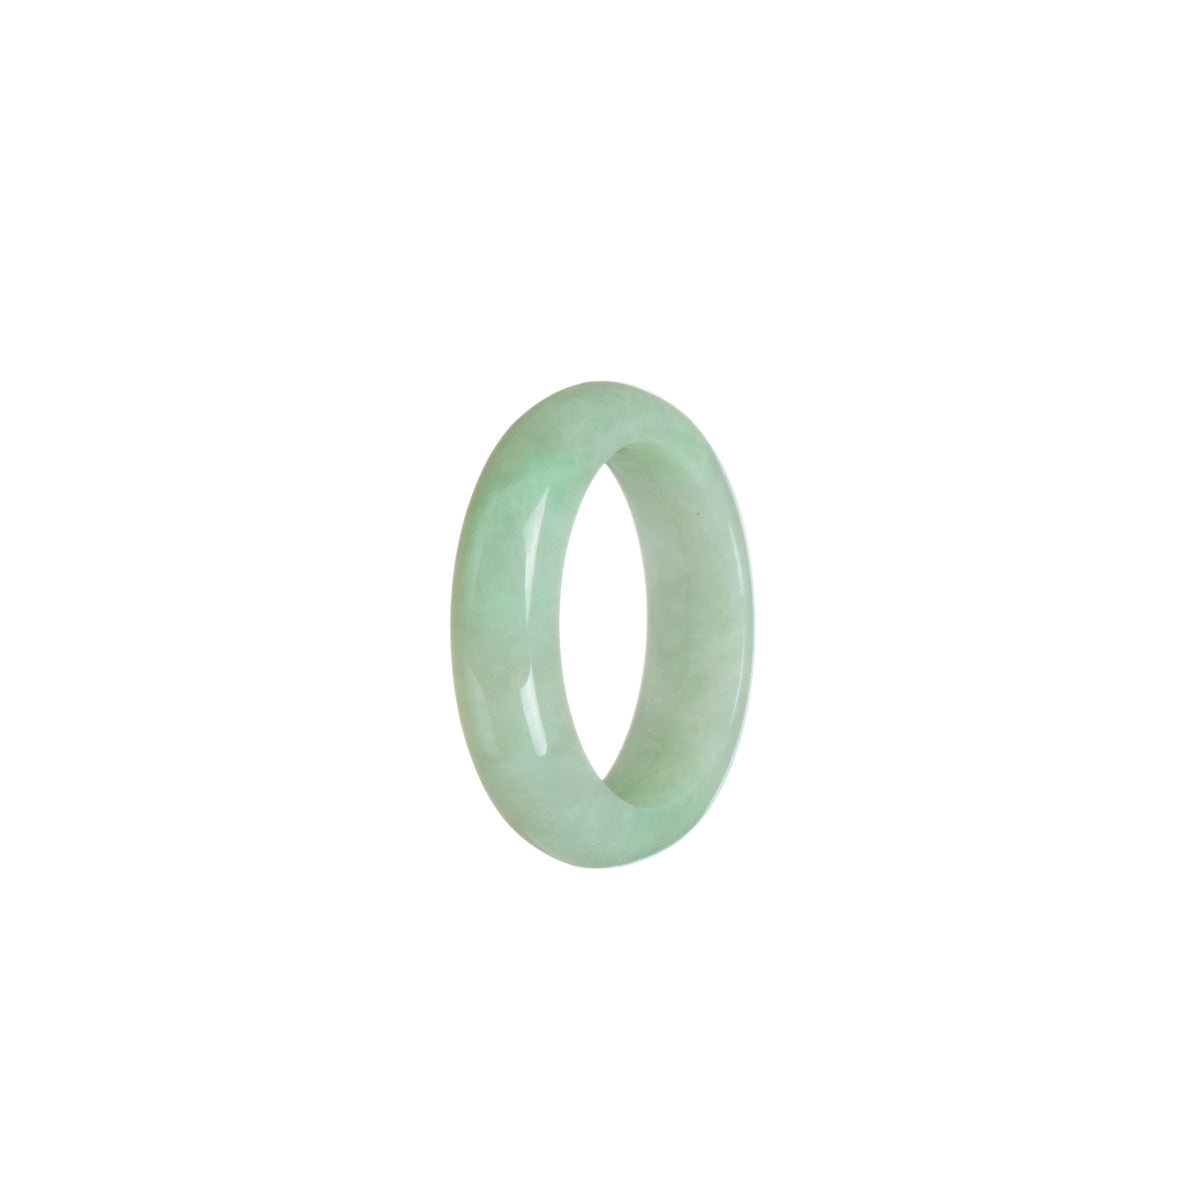 Certified Light green Burma Jade Ring - Size S